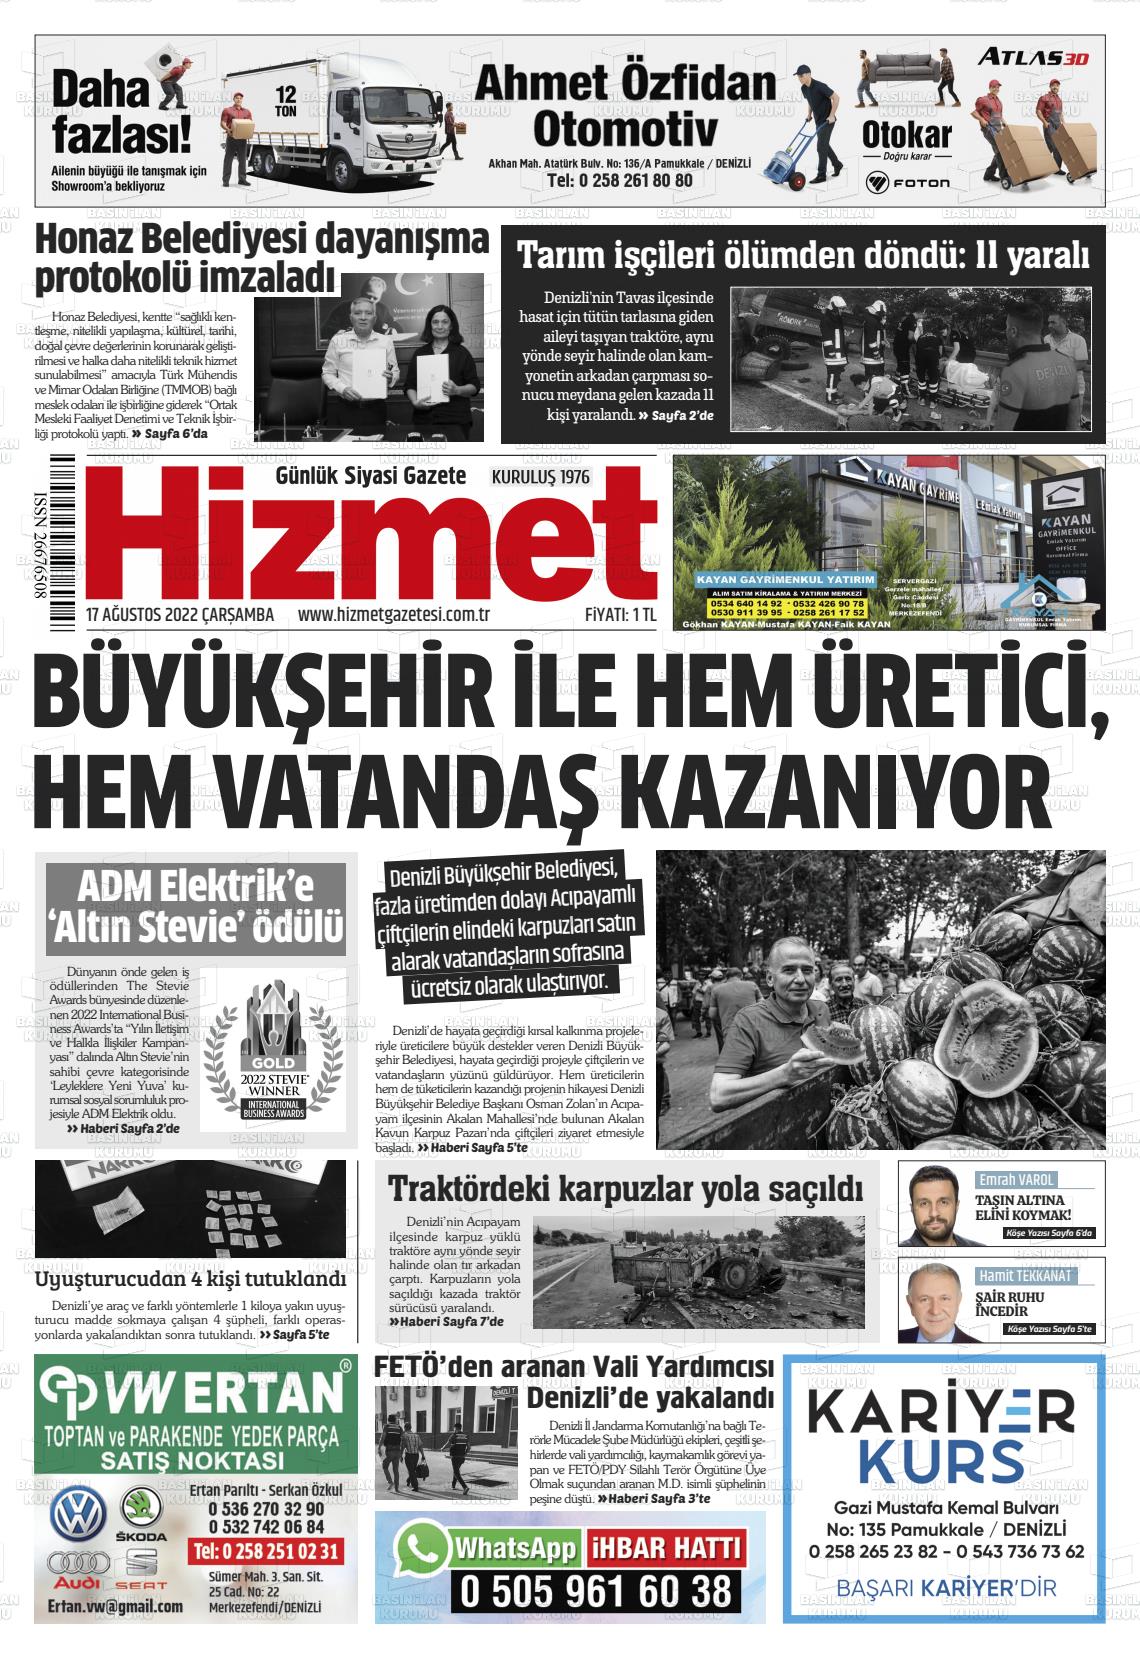 17 Ağustos 2022 Hizmet Gazete Manşeti